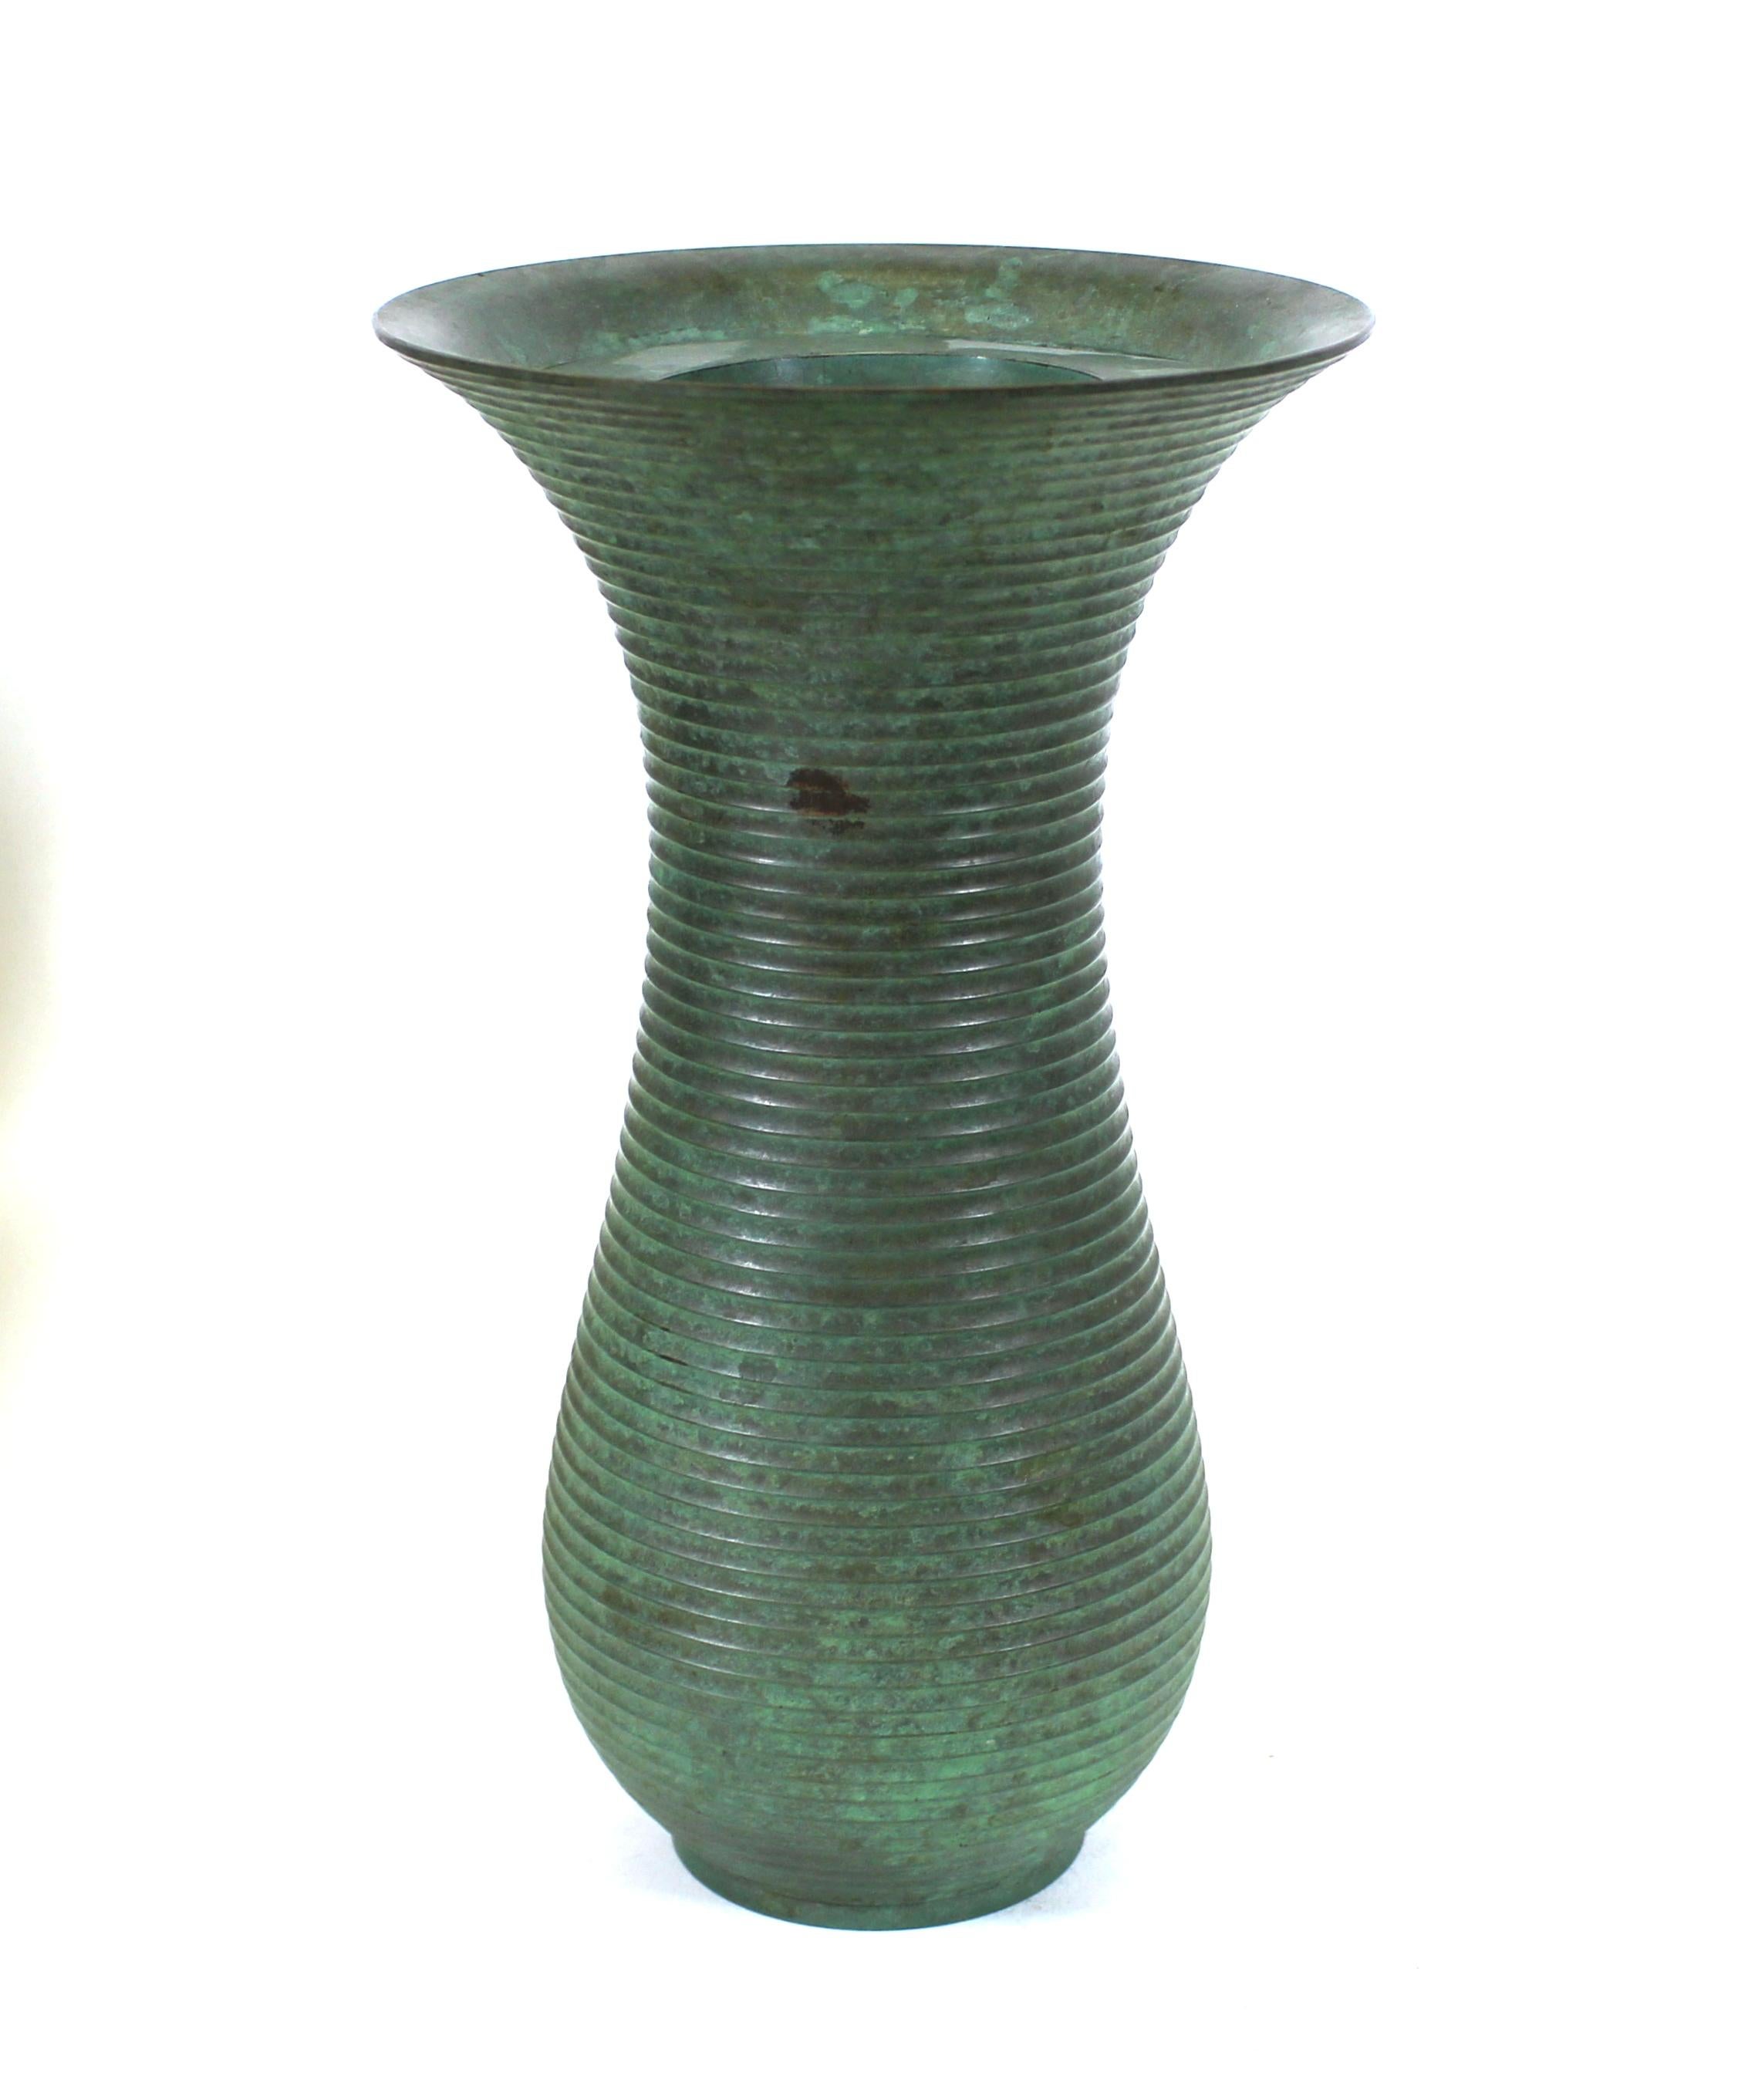 Japanese Mid-Century Modern ribbed metal ikebana vase with green patina.